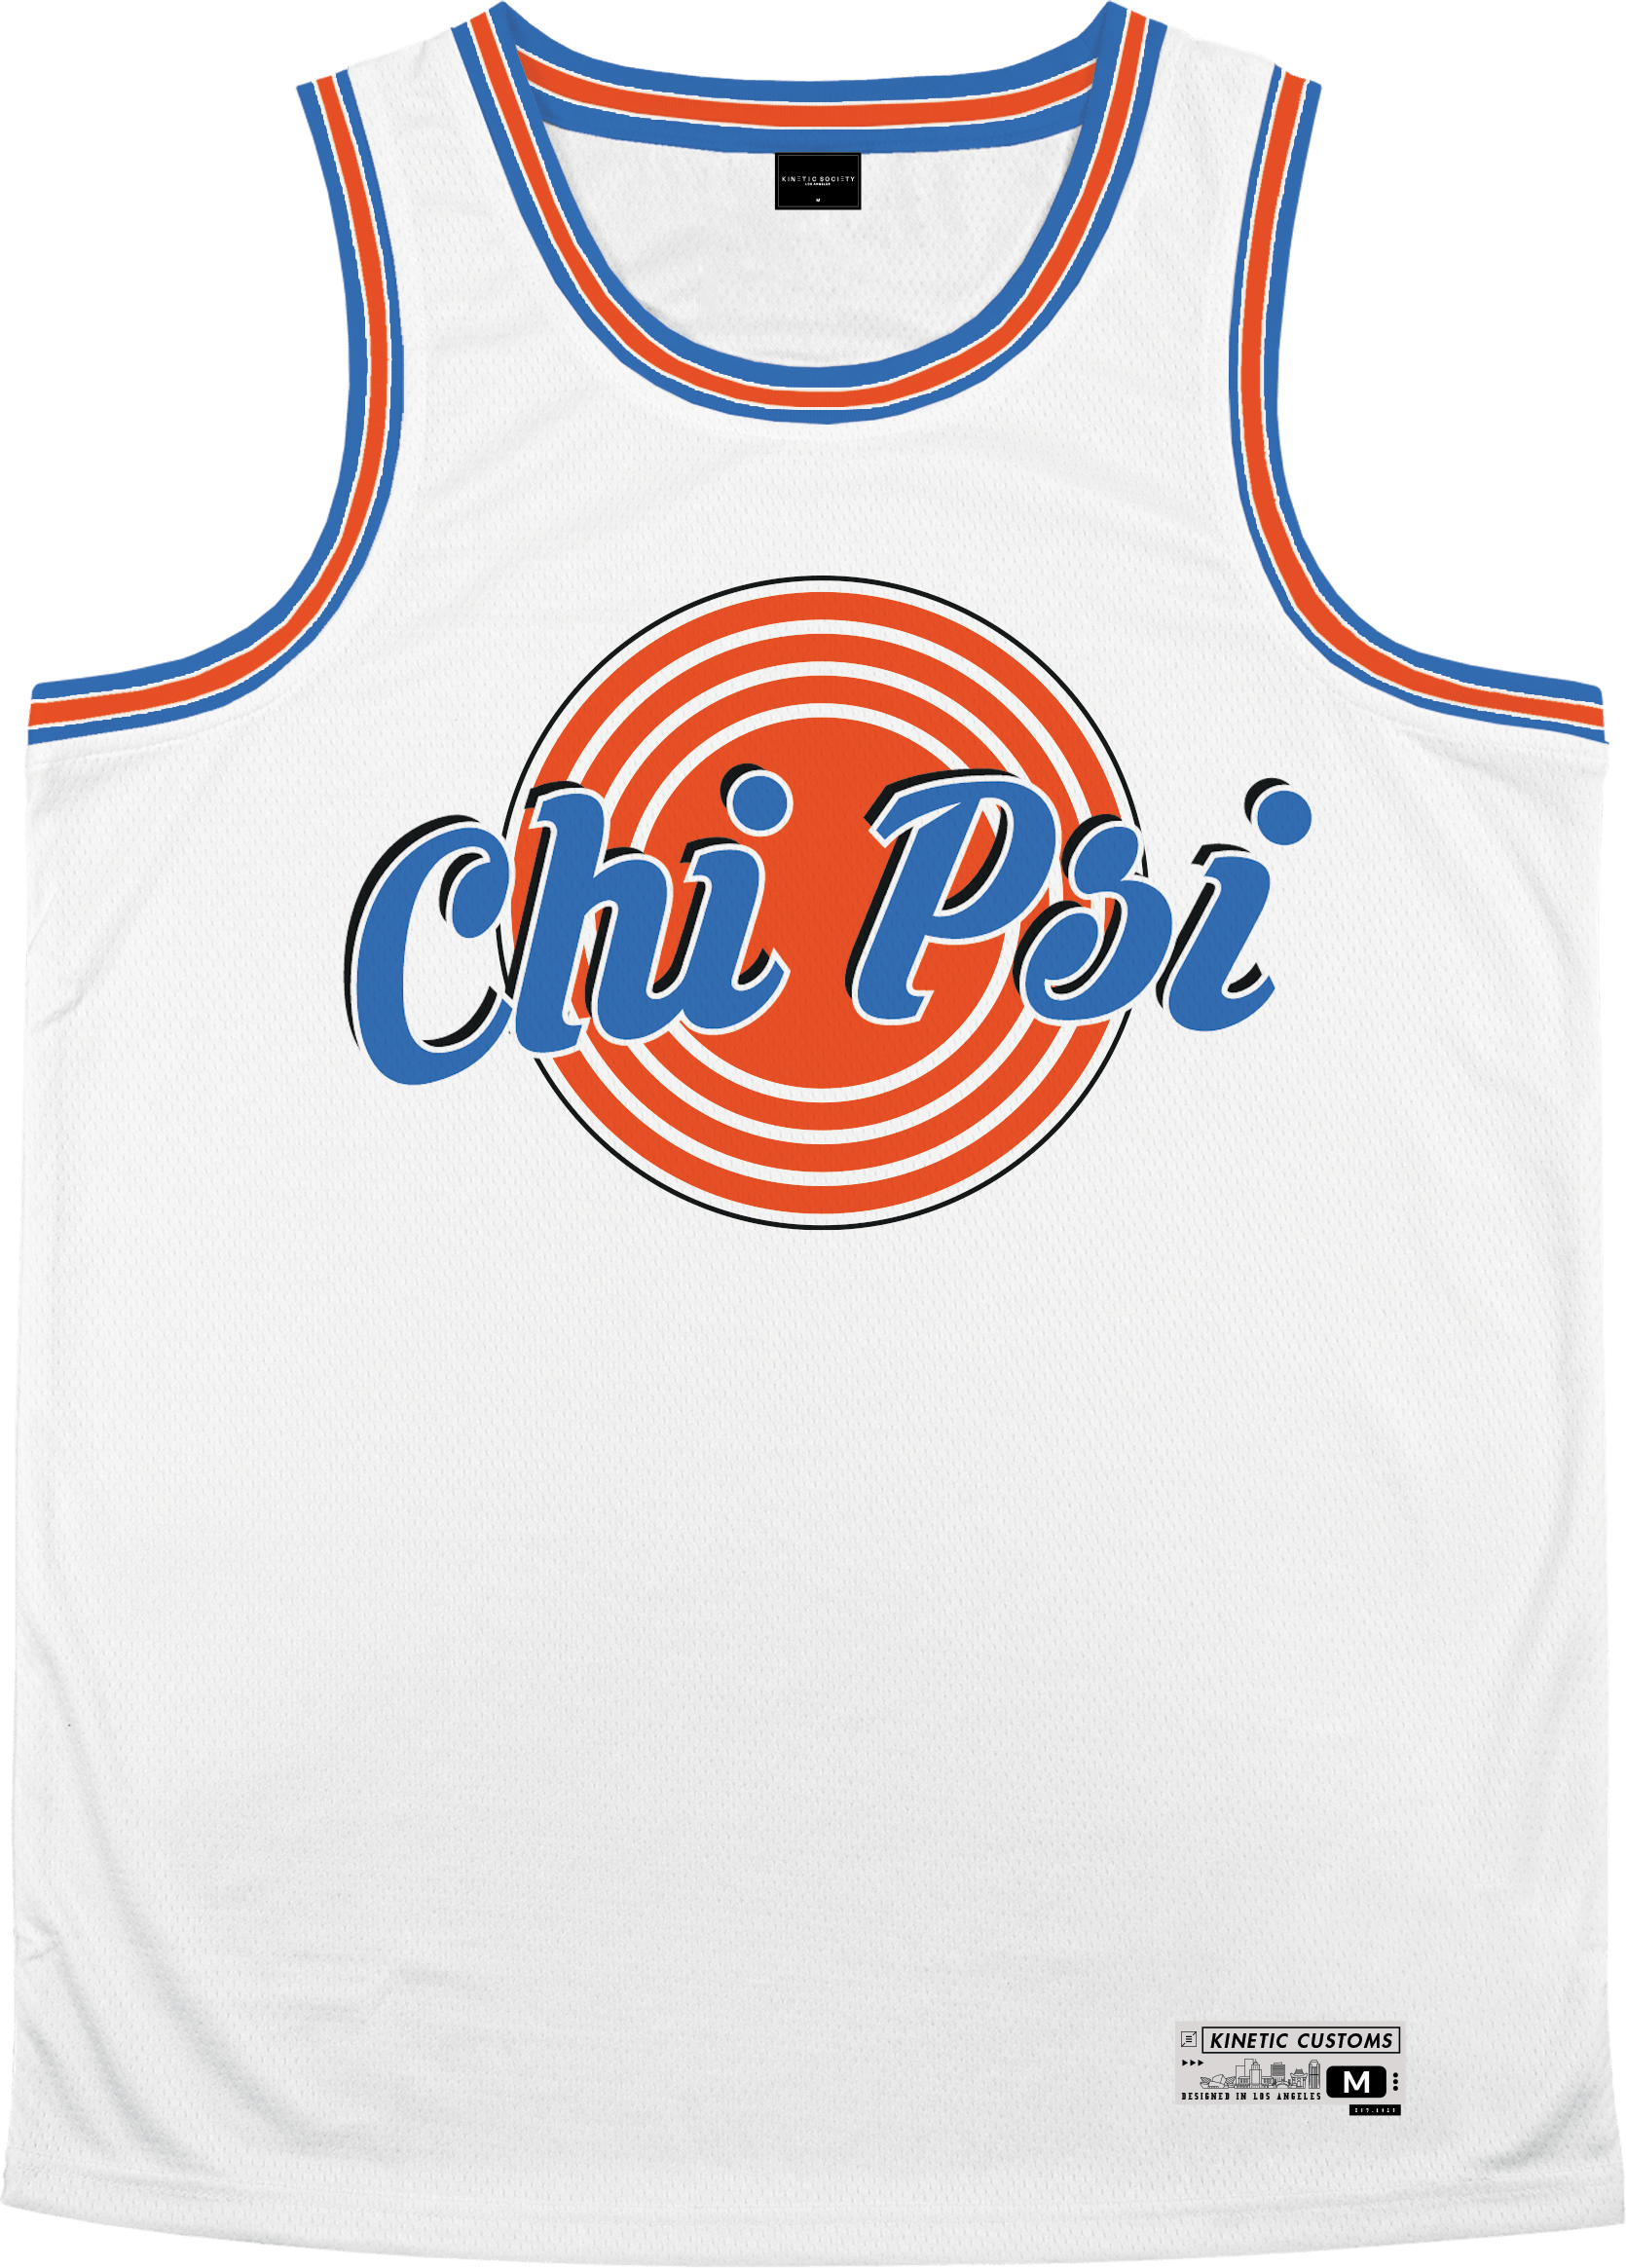 Chi Psi - Vintage Basketball Jersey - Kinetic Society